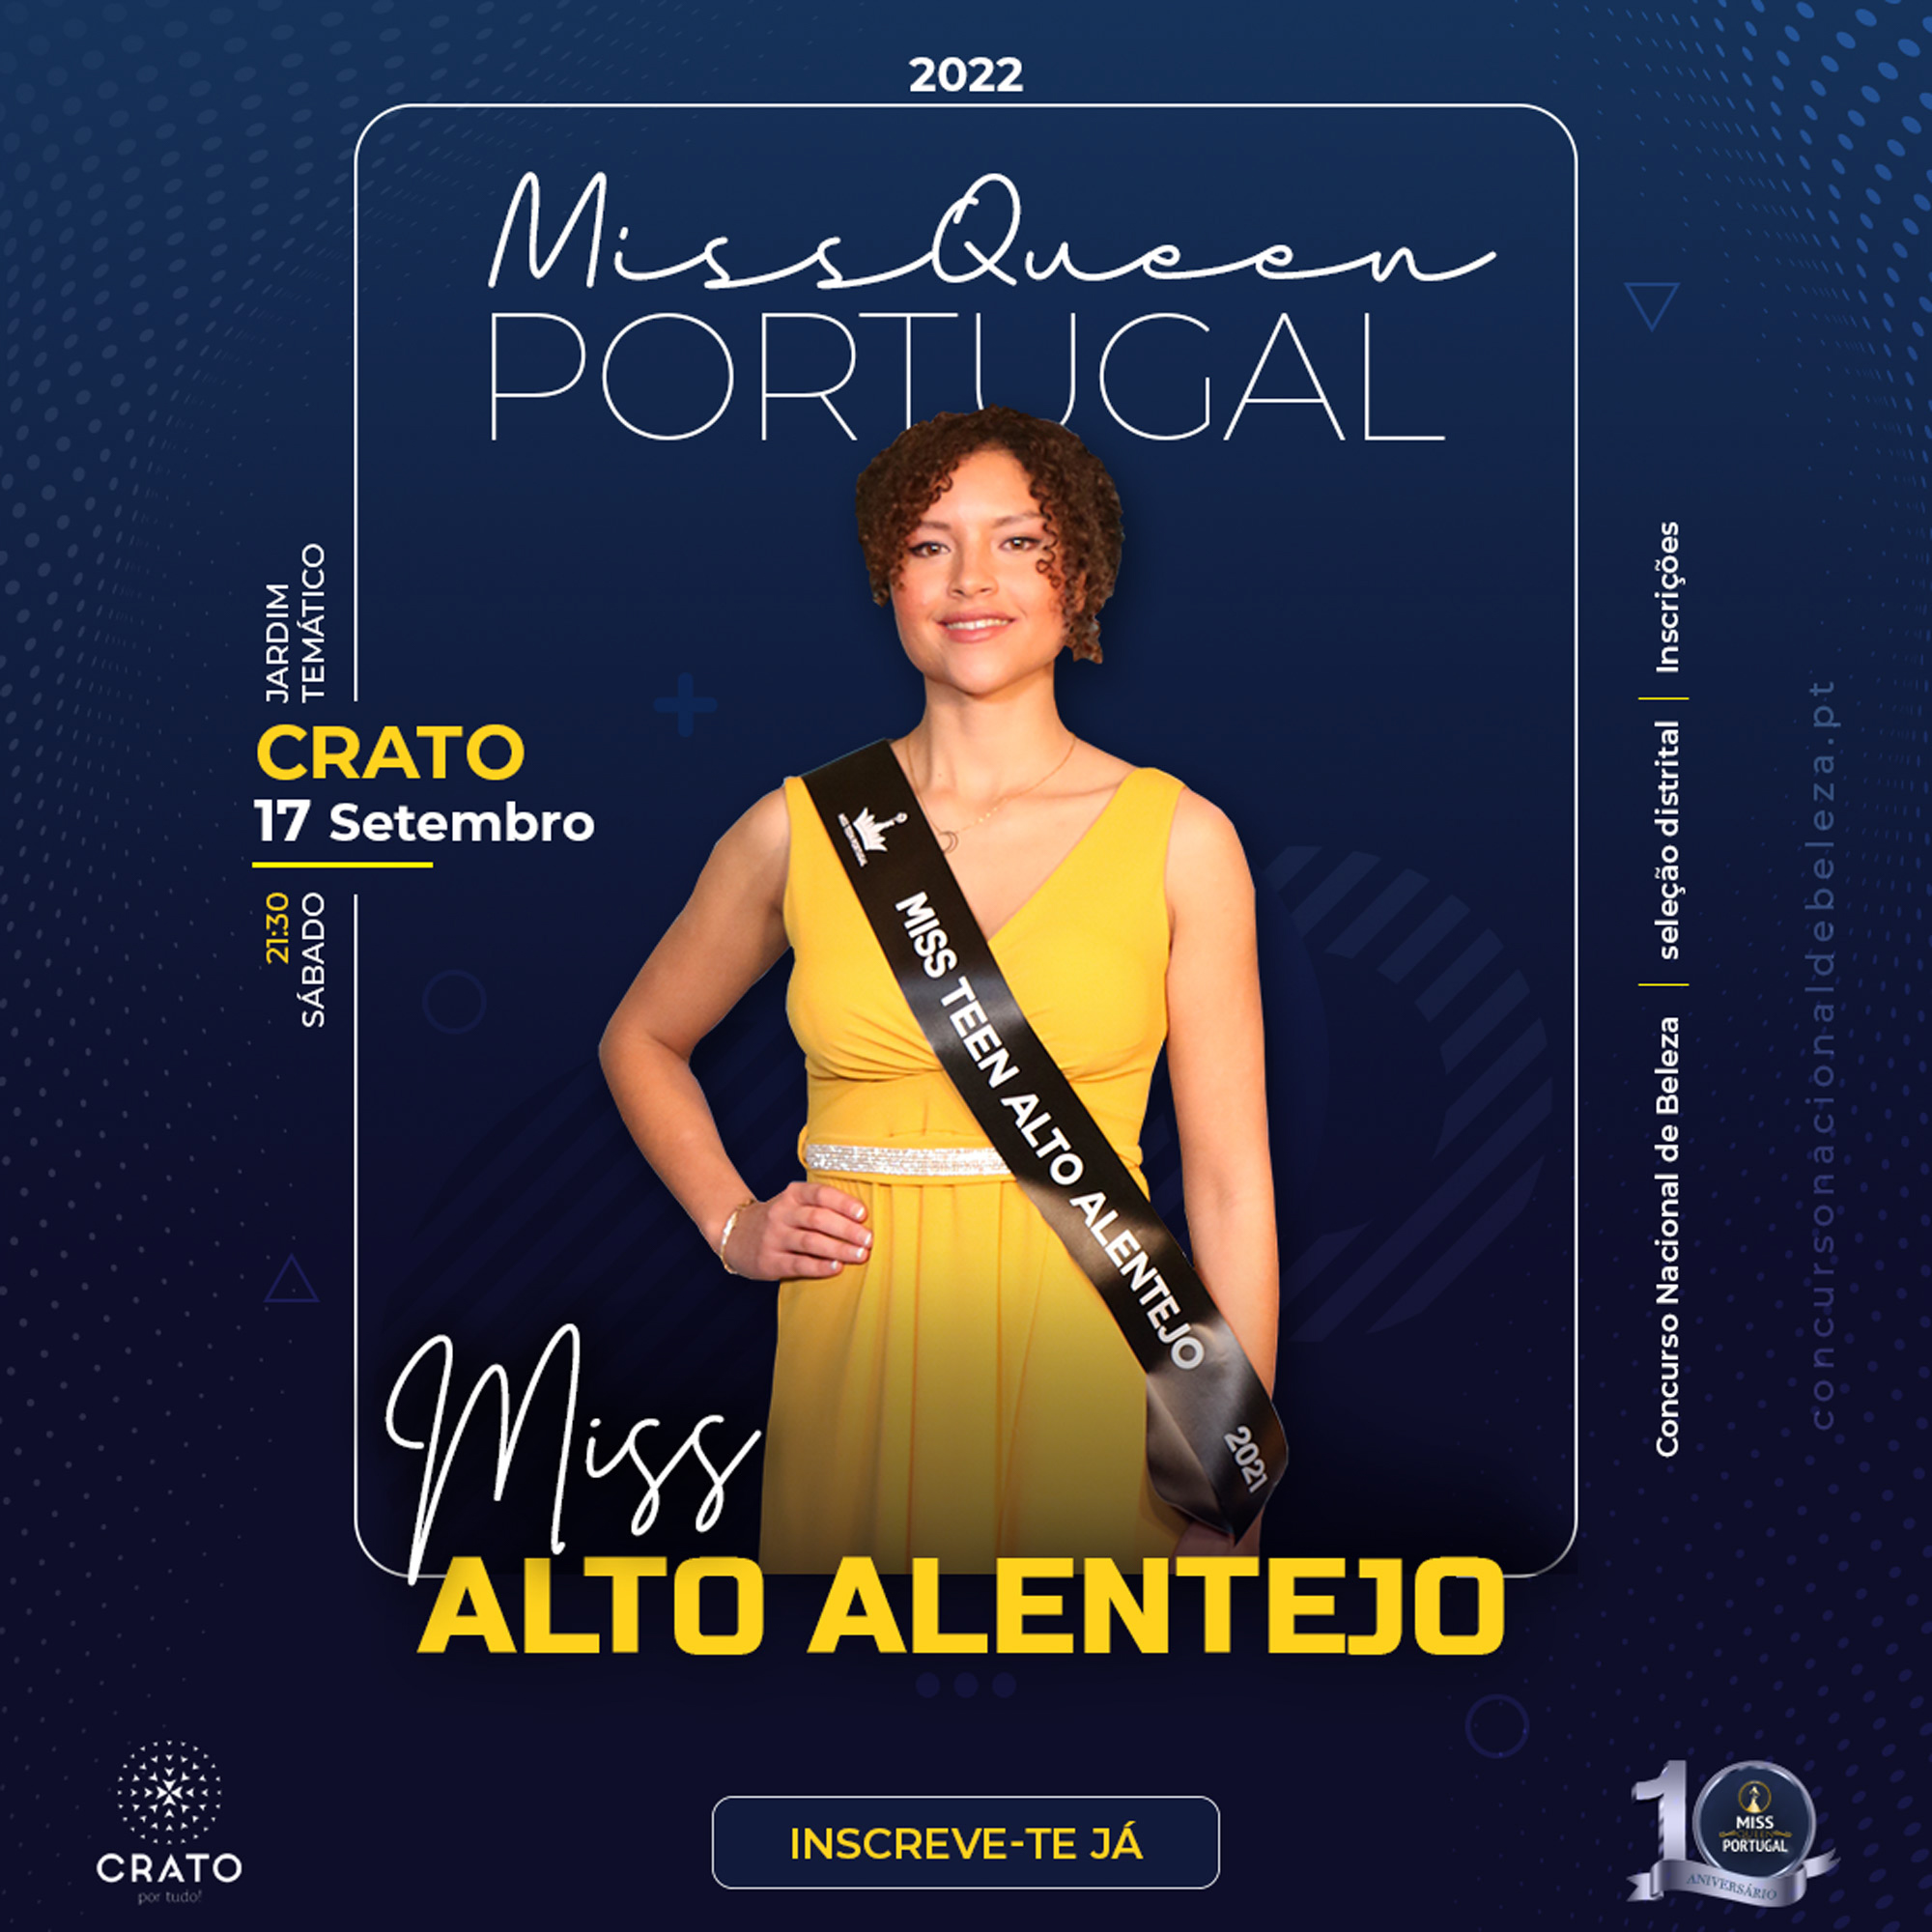 Miss Queen Portugal 2022 – Miss Alto Alentejo